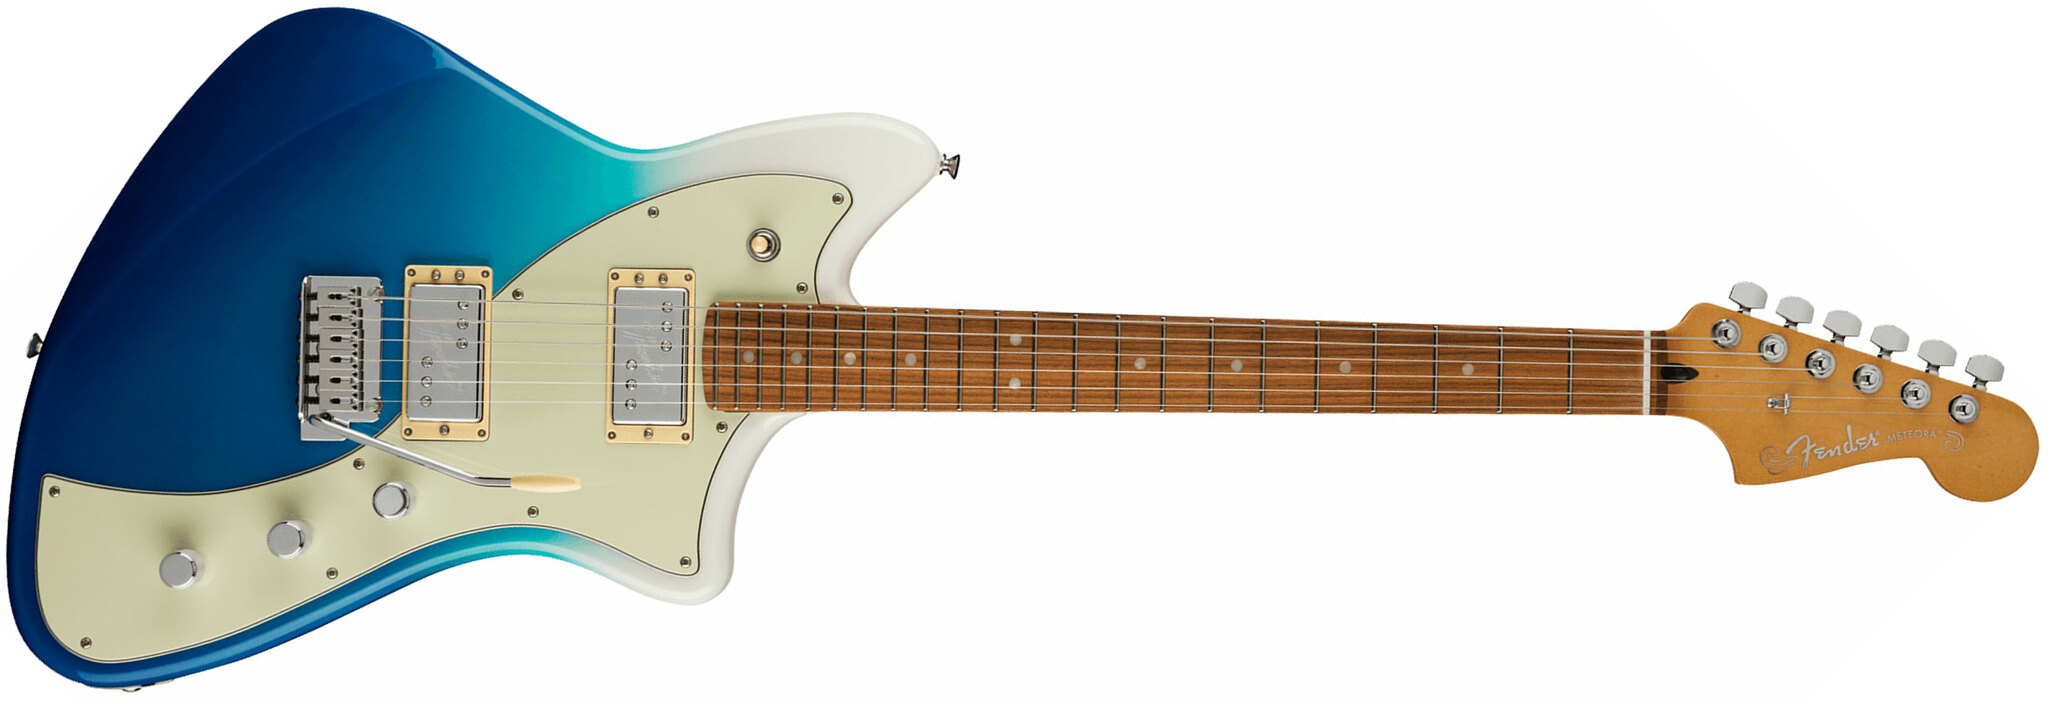 Fender Meteora Player Plus Hh Mex 2h Ht Pf - Belair Blue - Guitarra electrica retro rock - Main picture